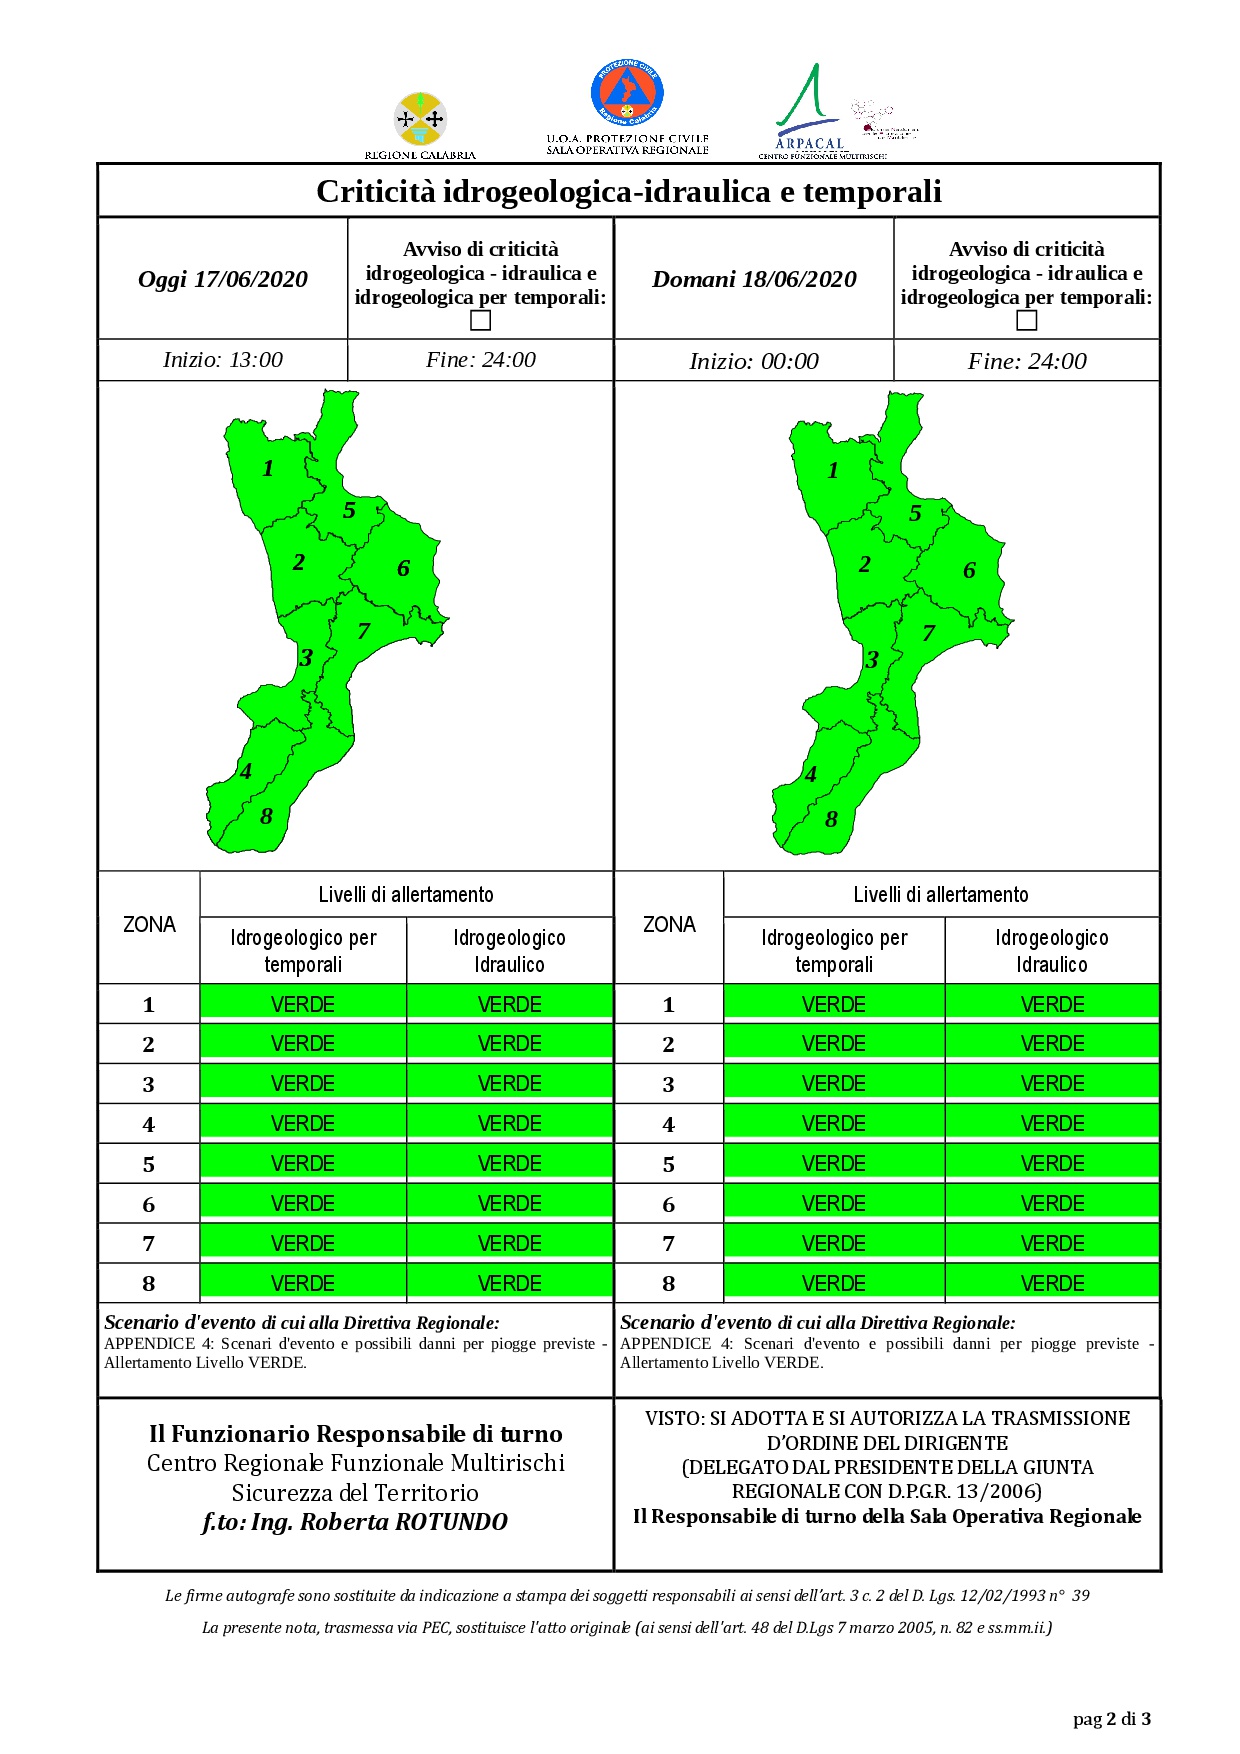 Criticità idrogeologica-idraulica e temporali in Calabria 17-06-2020